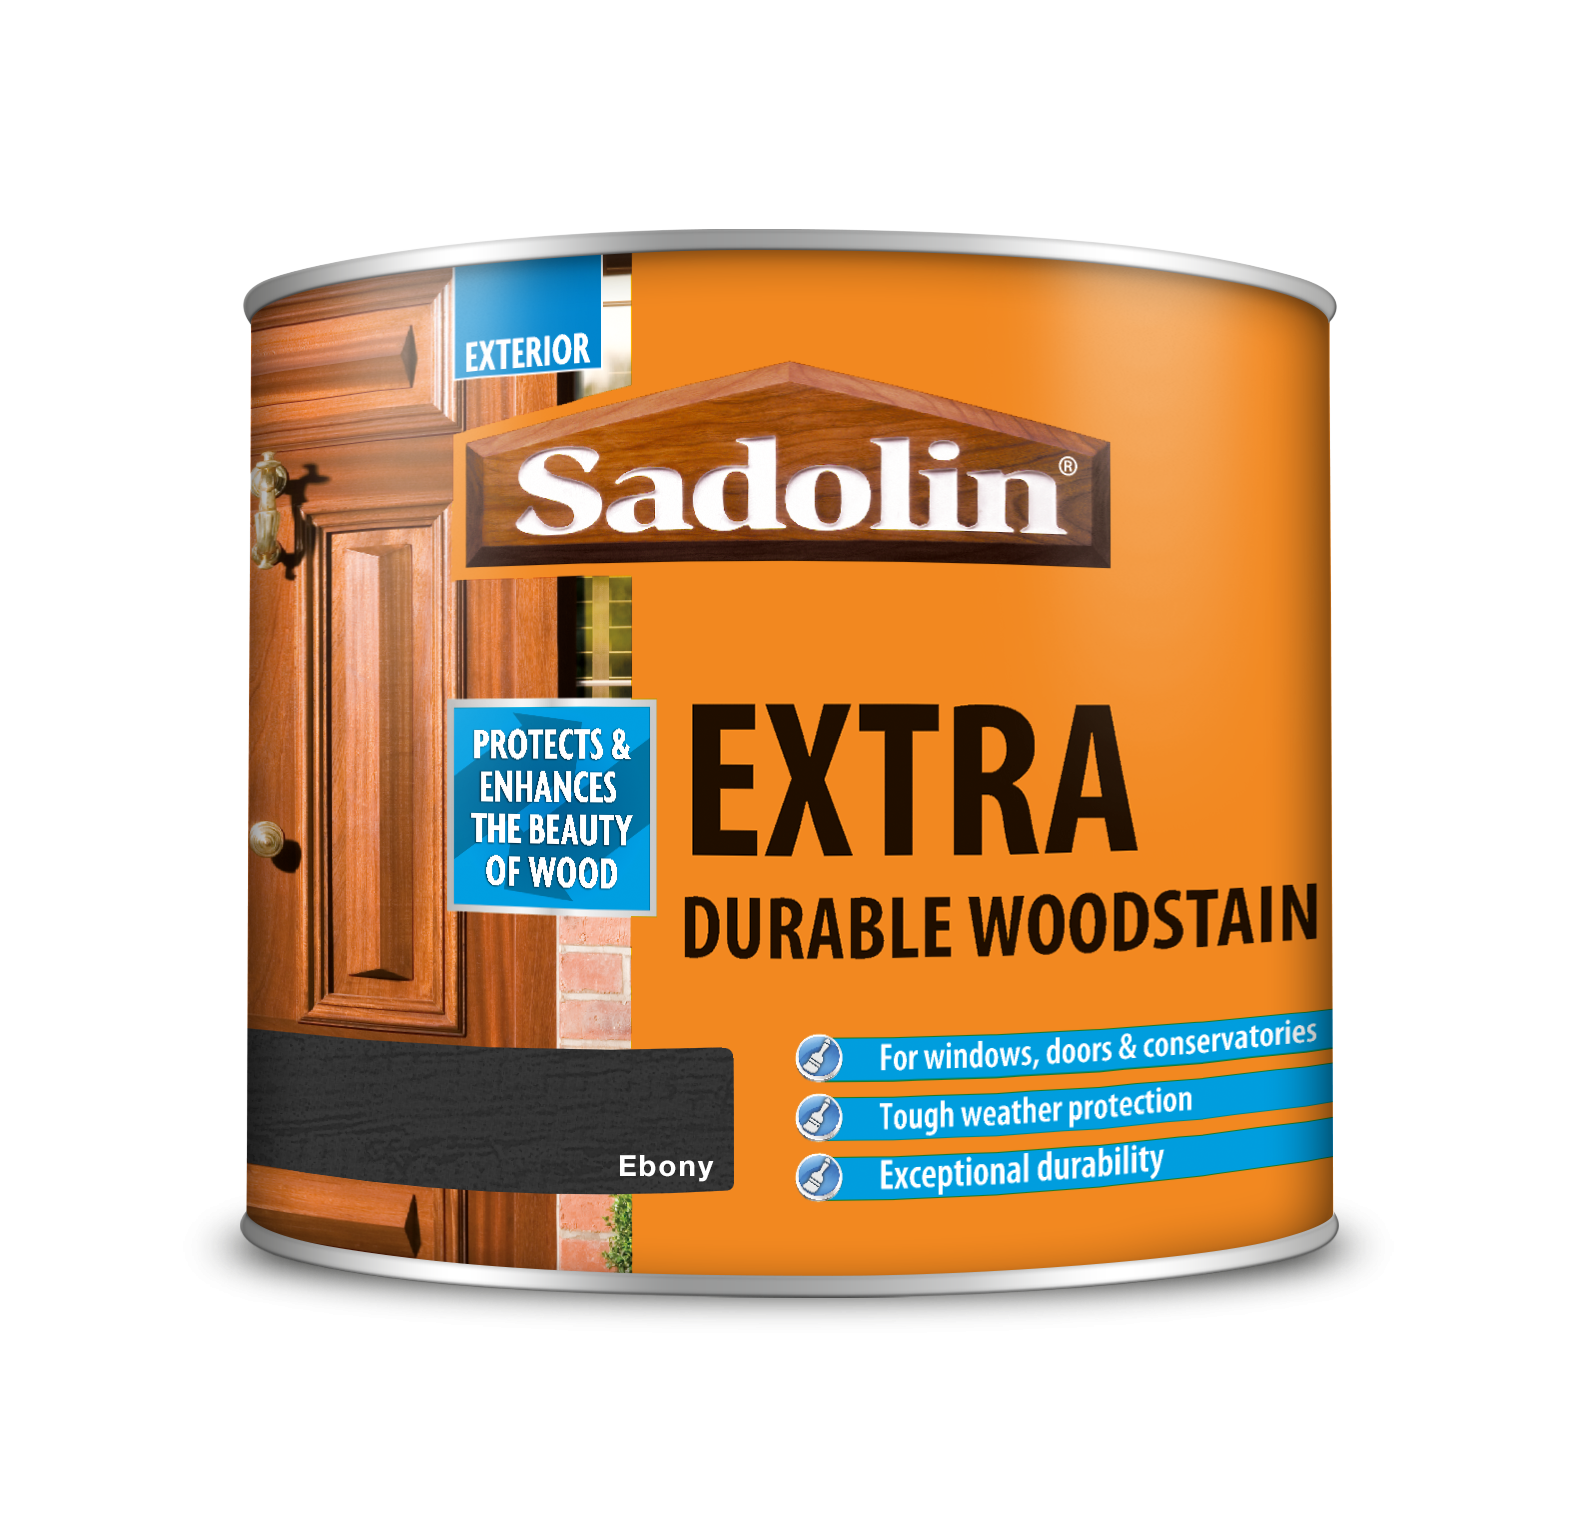 Sadolin Extra Durable Woodstain Ebony 500ml [MPPSSUI]  5028541